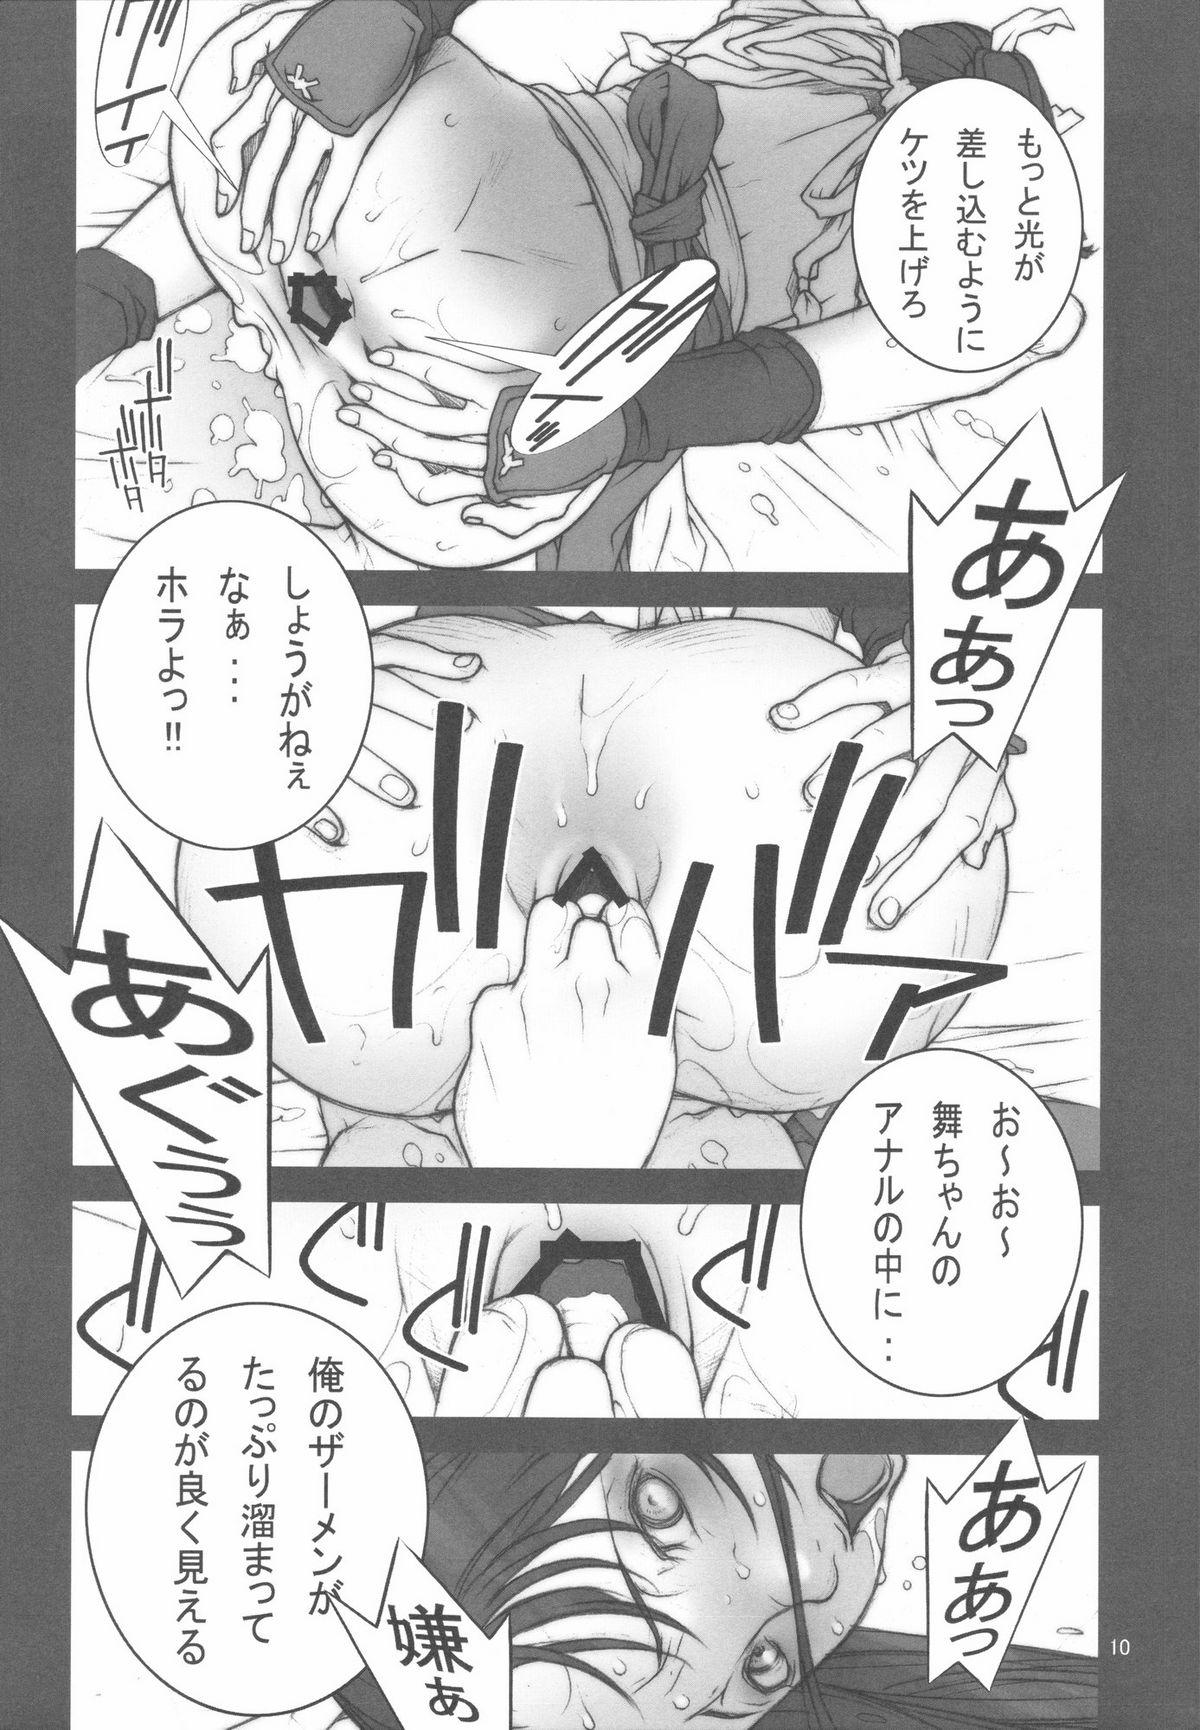 Kashima KAKUTOU-GAME BON - King of fighters Fatal fury Dance - Page 11